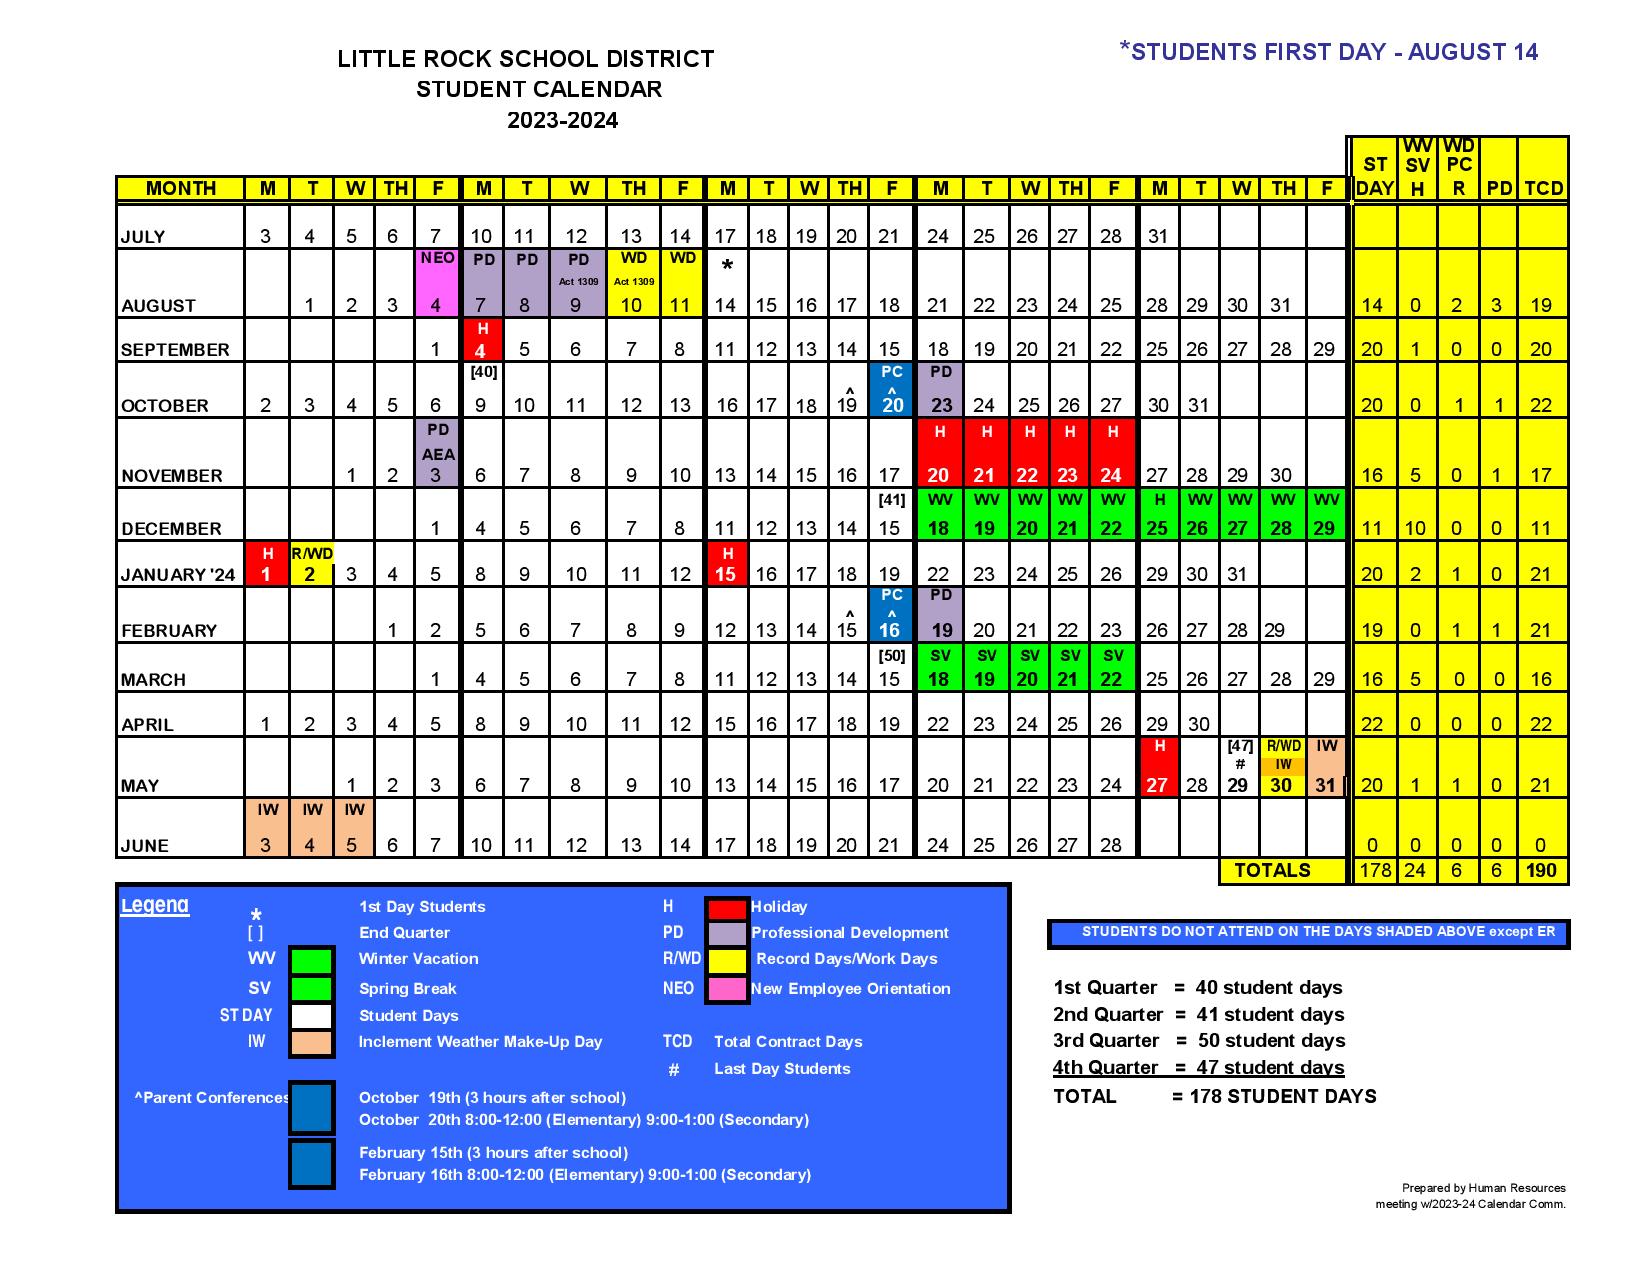 Little Rock School District Calendar Holidays 2024 PDF